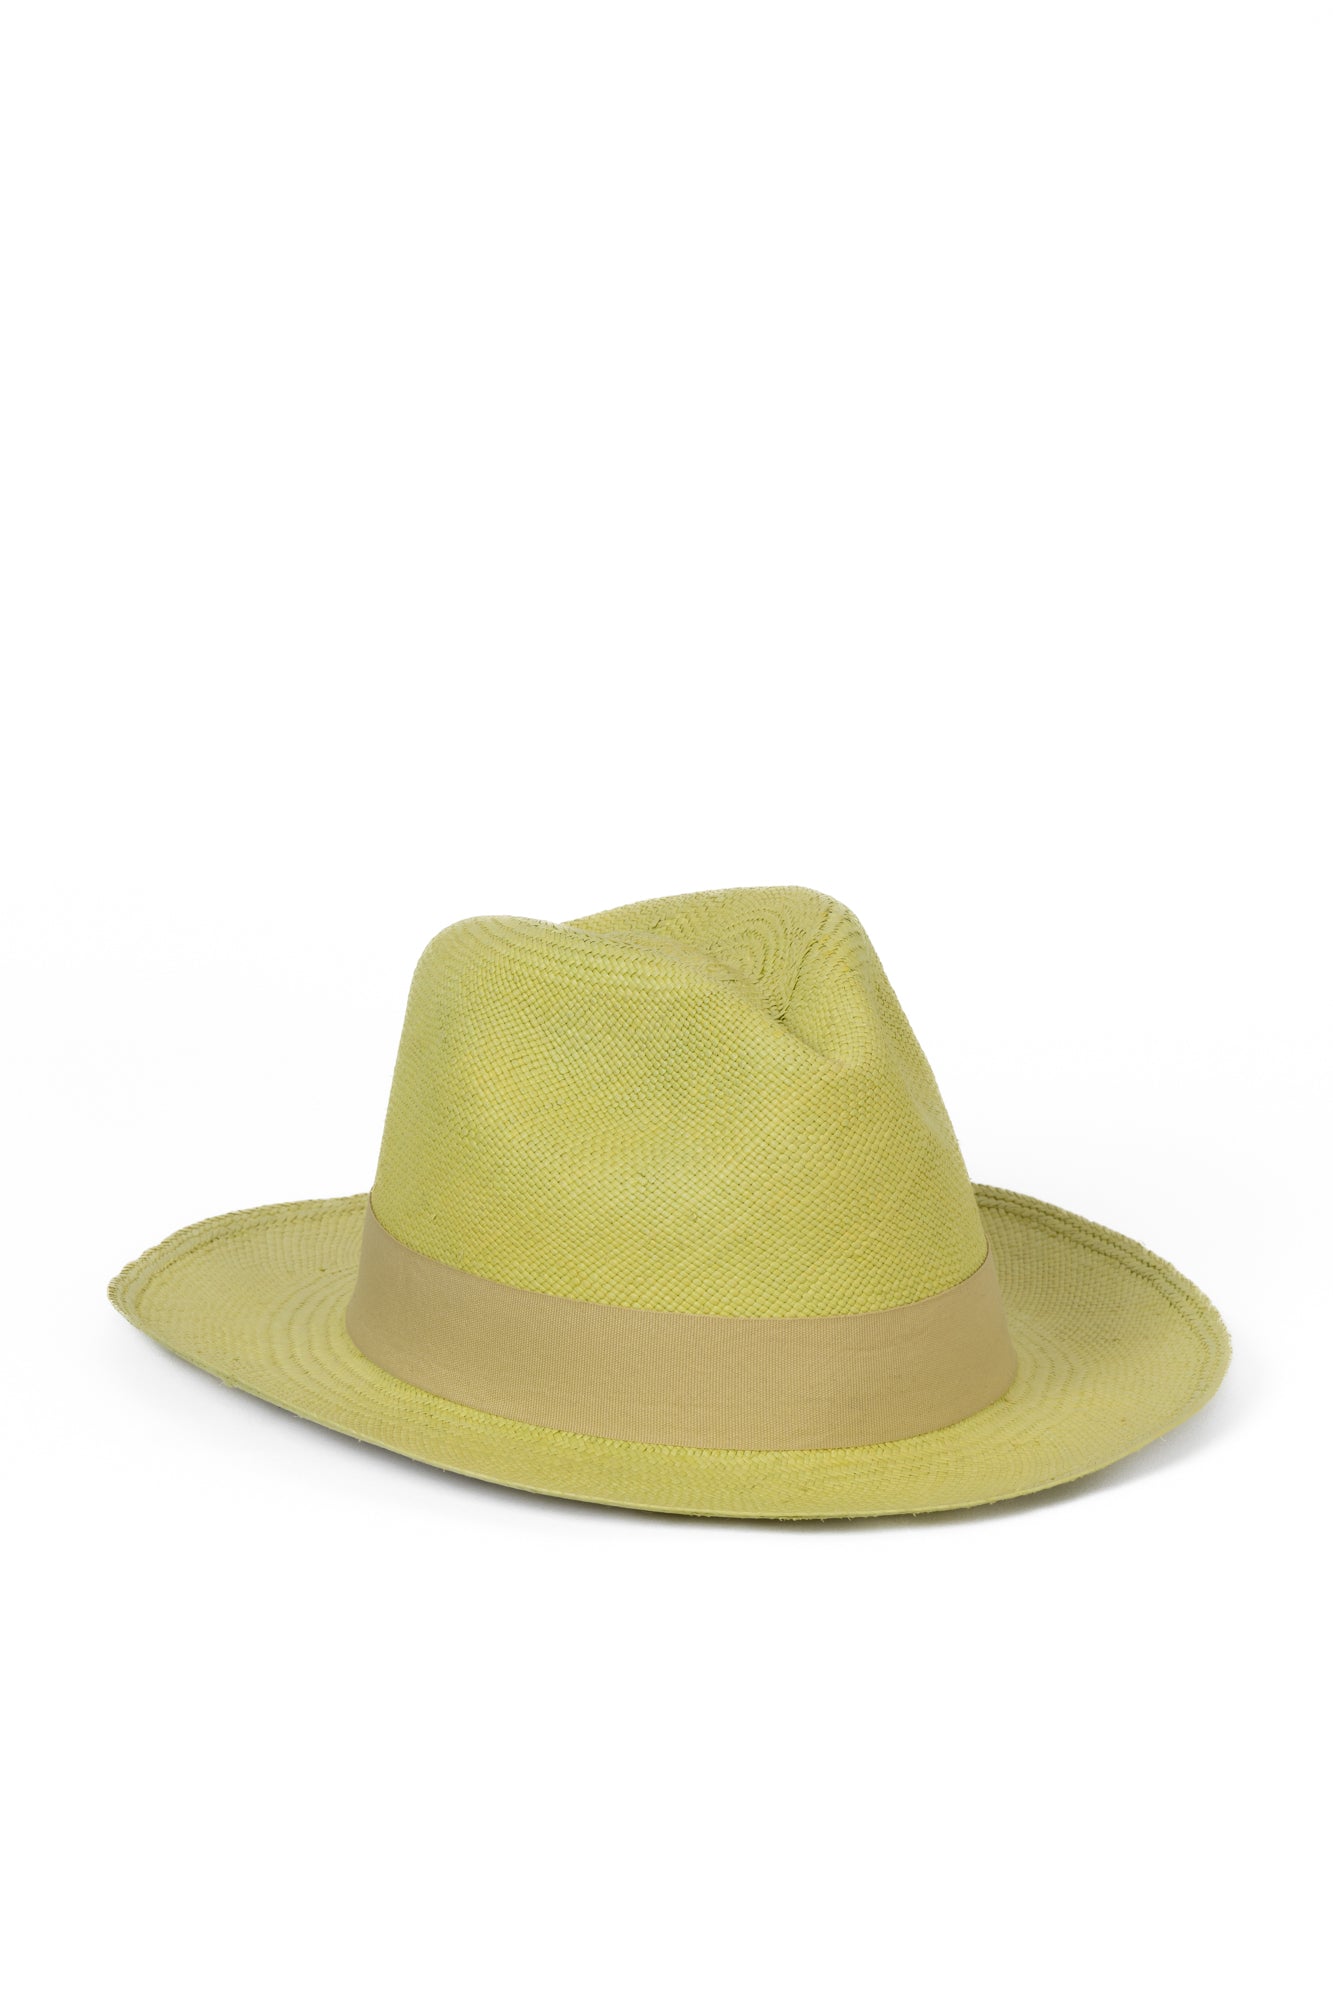 Multicolor Woven Panama Hat